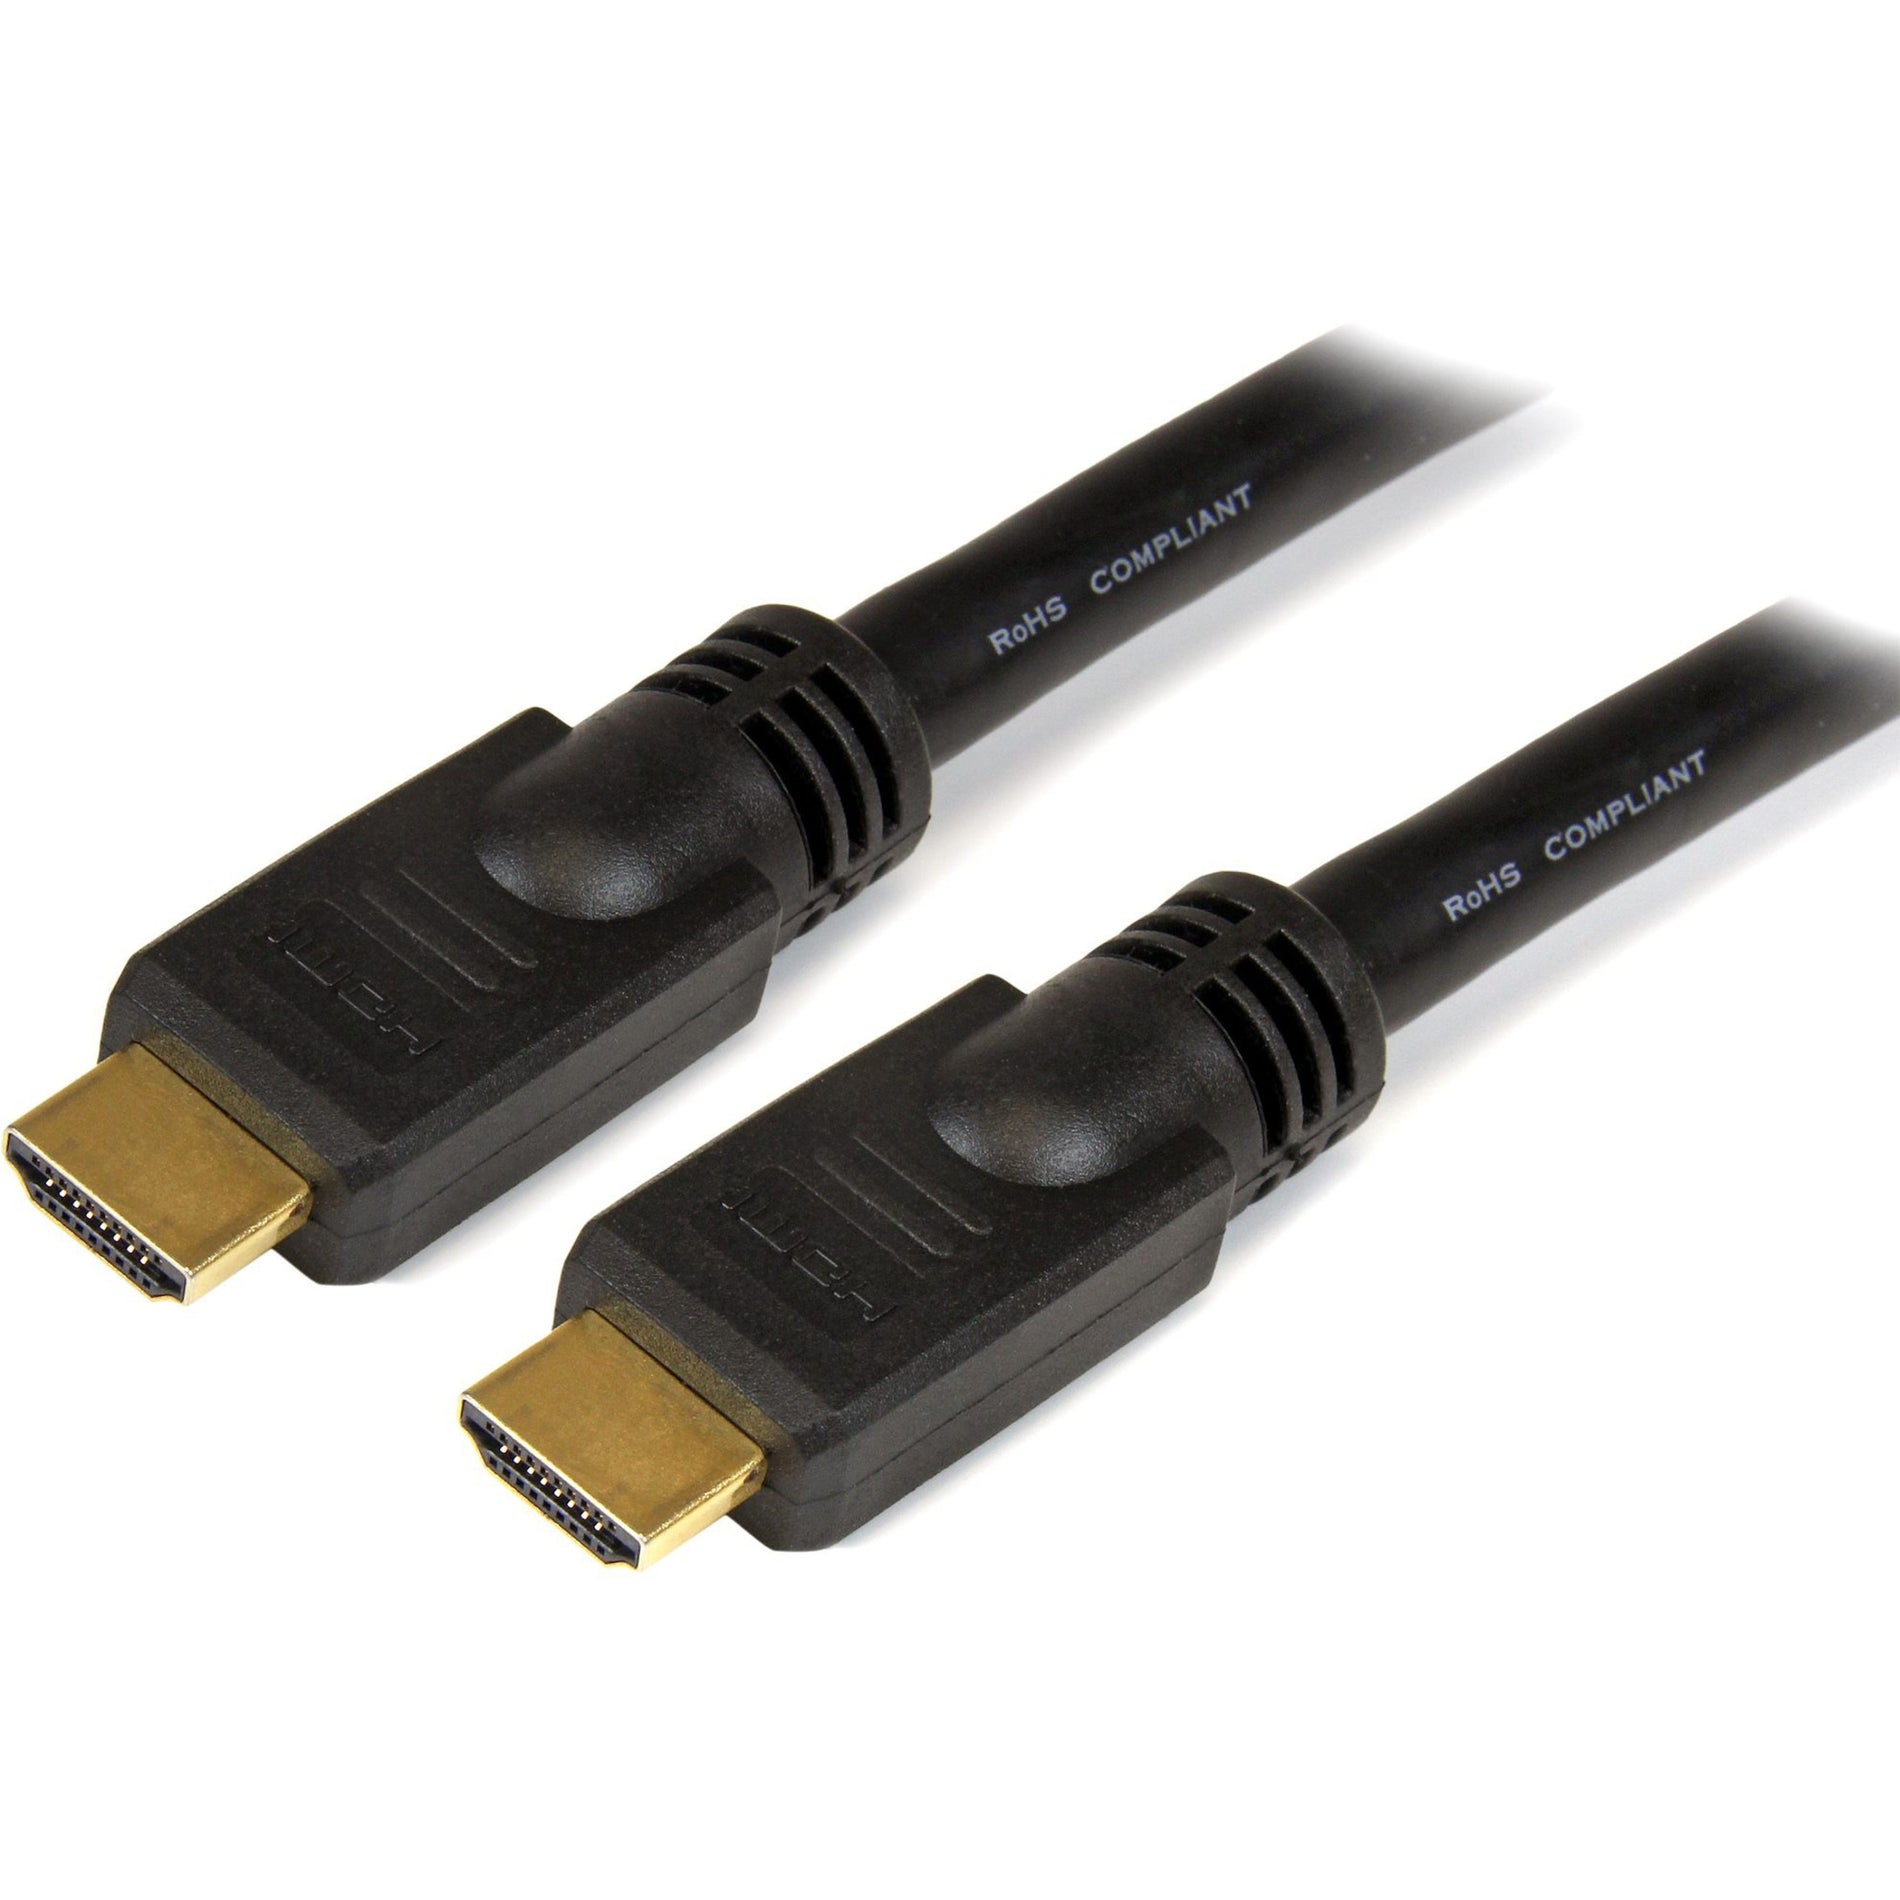 StarTech.com HDMM20 20 ft High Speed HDMI Kabel - Ultra HD 4k x 2k HDMI Kabel Geformt Vergoldete Anschlüsse Schwarz